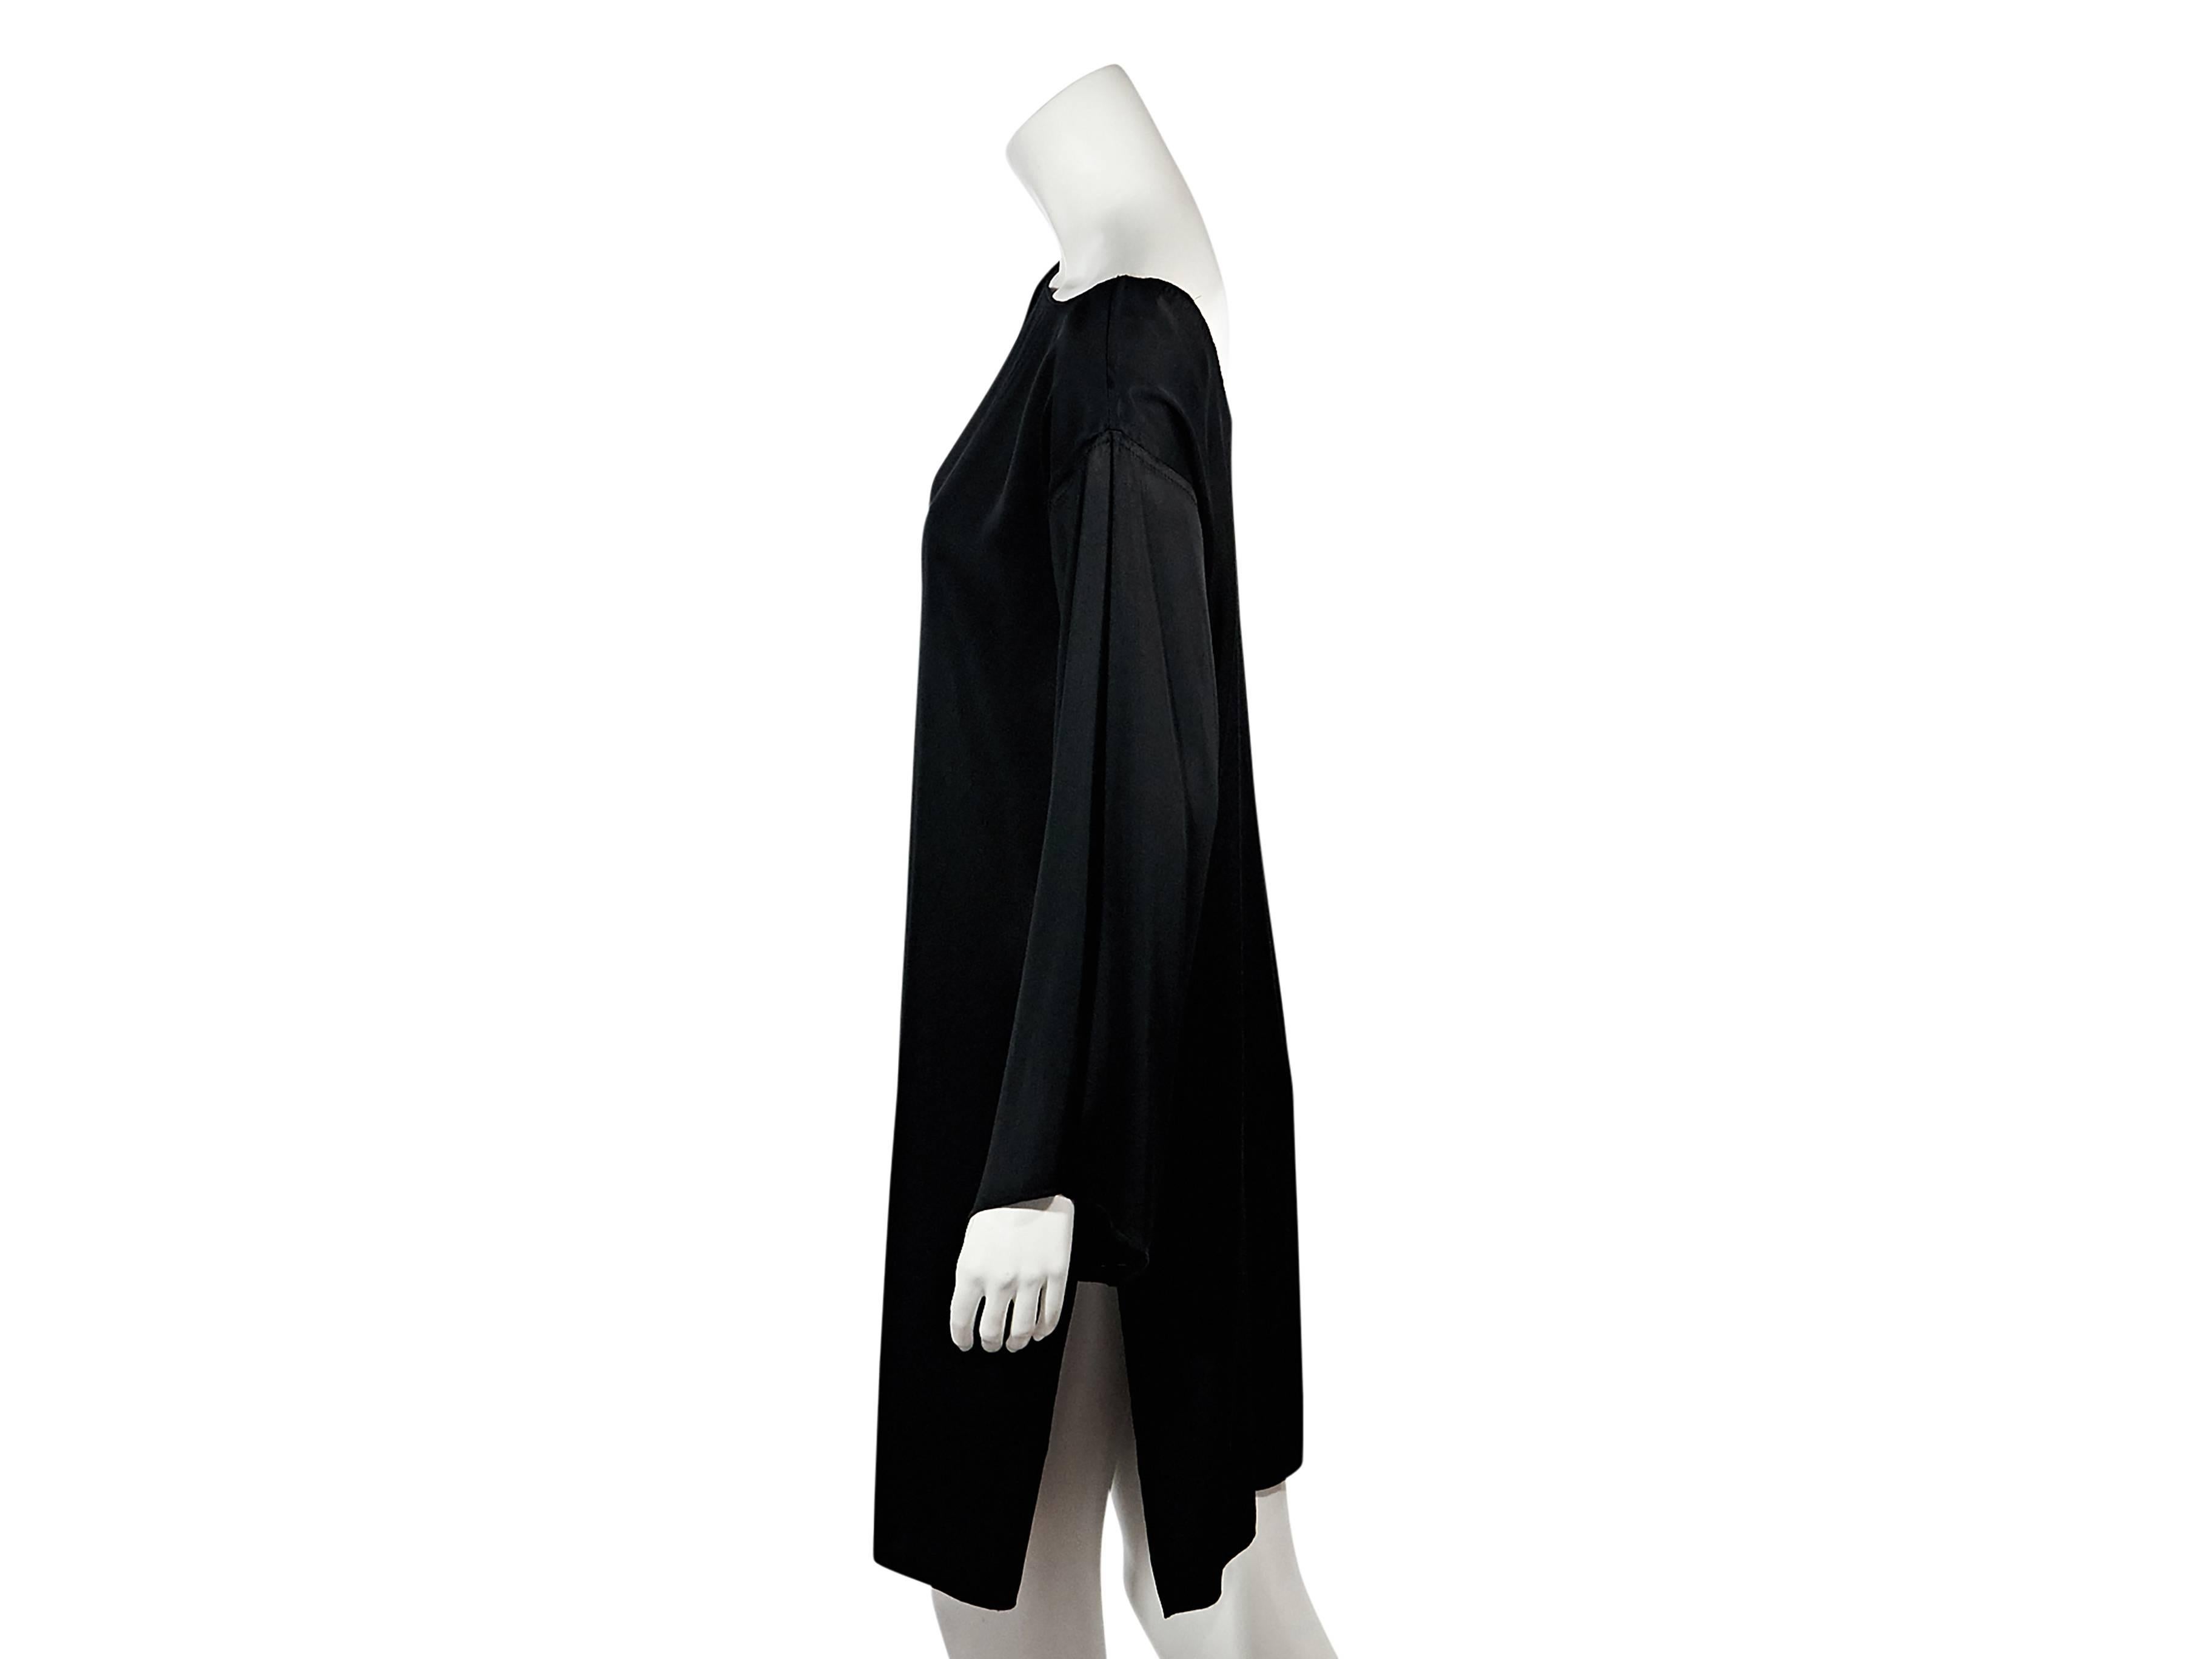 Product details: Black shift dress by Ann Demeulemeester. Boatneck. Long sleeves. Scoopback. Side hem slit. Label size IT 36.
Condition: Very good. 
Est. Retail $ 748.00